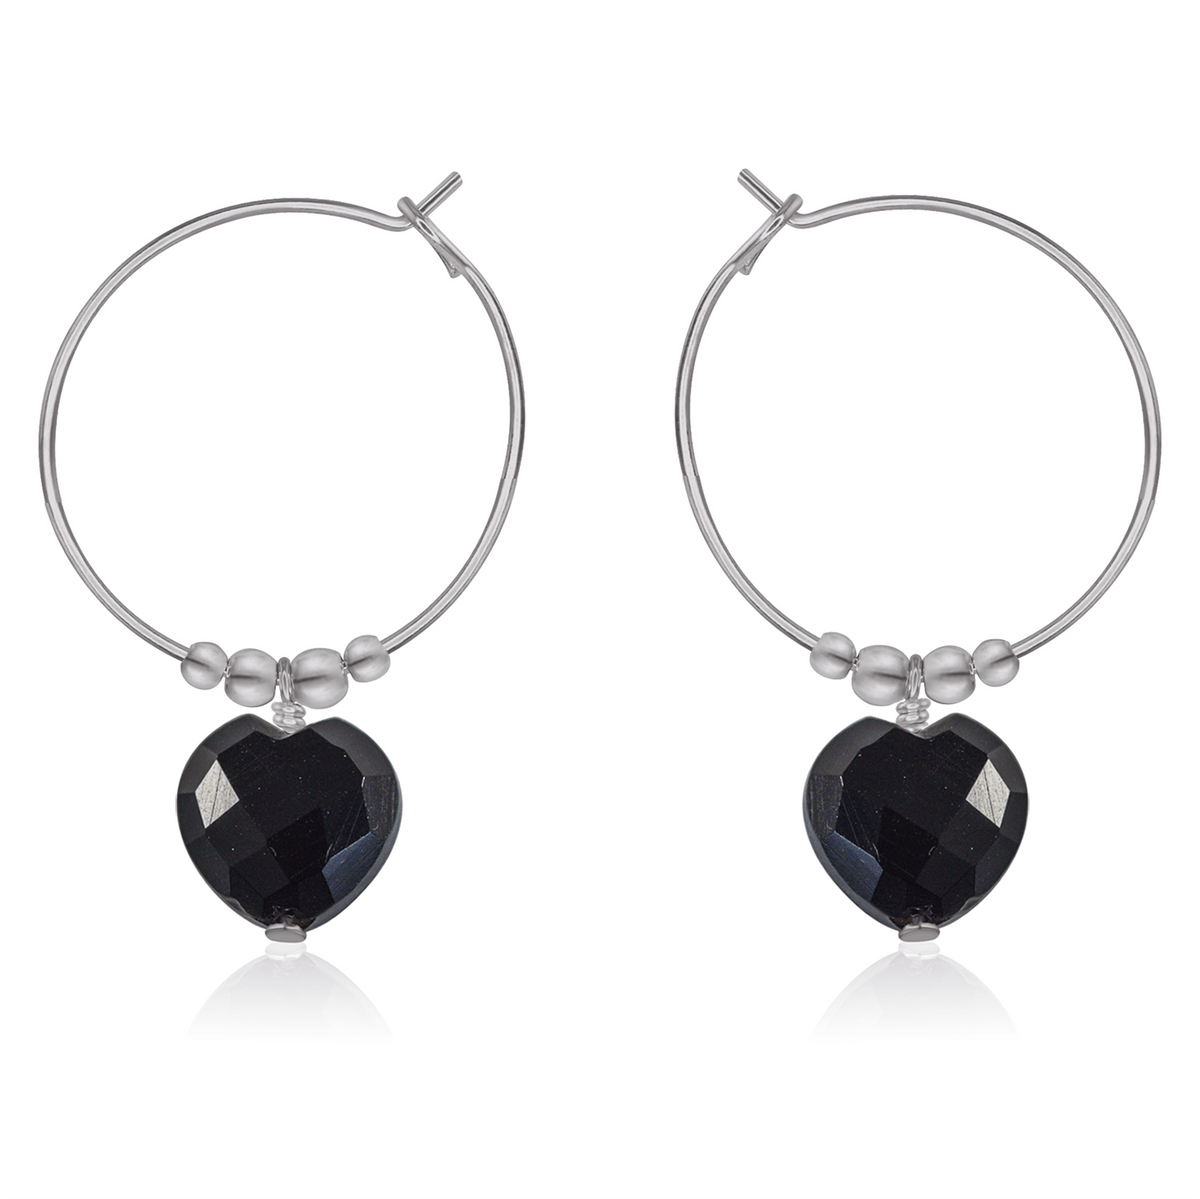 Black Onyx Crystal Heart Dangle Hoop Earrings - Black Onyx Crystal Heart Dangle Hoop Earrings - Stainless Steel - Luna Tide Handmade Crystal Jewellery